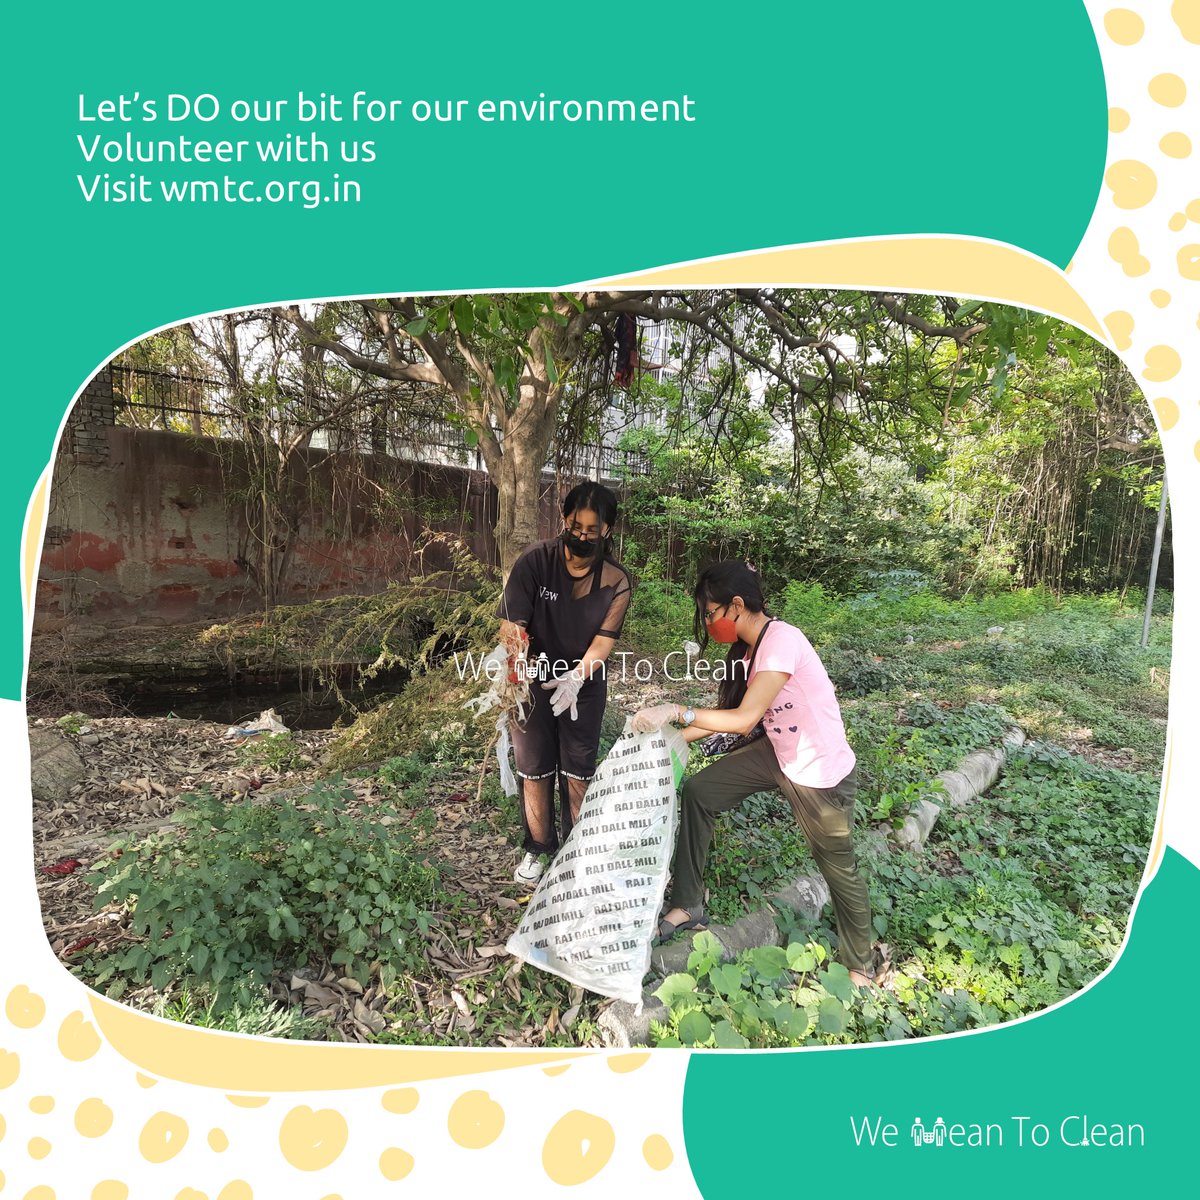 Let's join hands for #CleanDelhi #SwachhBharat #MyCleanIndia Visit wmtc.org.in #WeMeanToClean #Volunteer #Volunteering #Delhi #DelhiNCR #Shramdaan #GlobalWarming #ClimateChange #ClimateCrisis #ClimateEmergency #WeDontHaveTime #ClimateActionNow